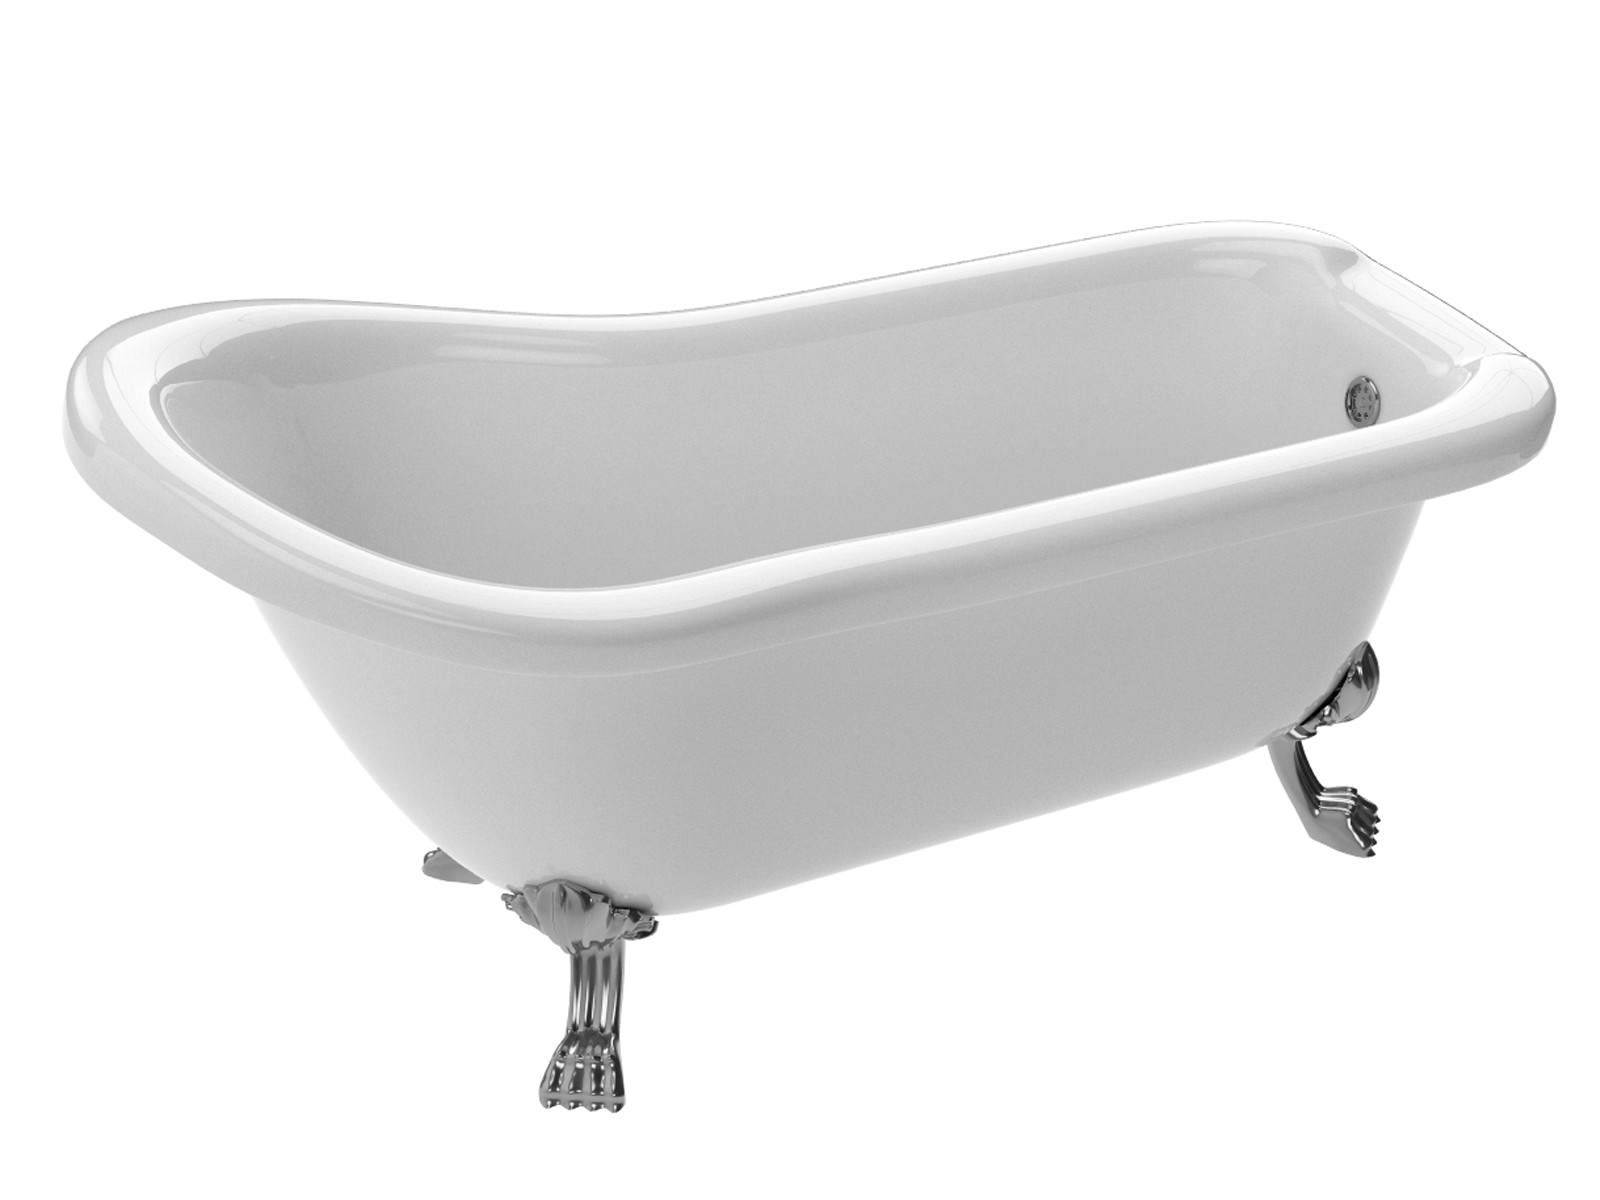 Anzzi FT-AZ902b Pegasus Series 5.5 ft. Clawfoot Non-Whirlpool Bathtub White